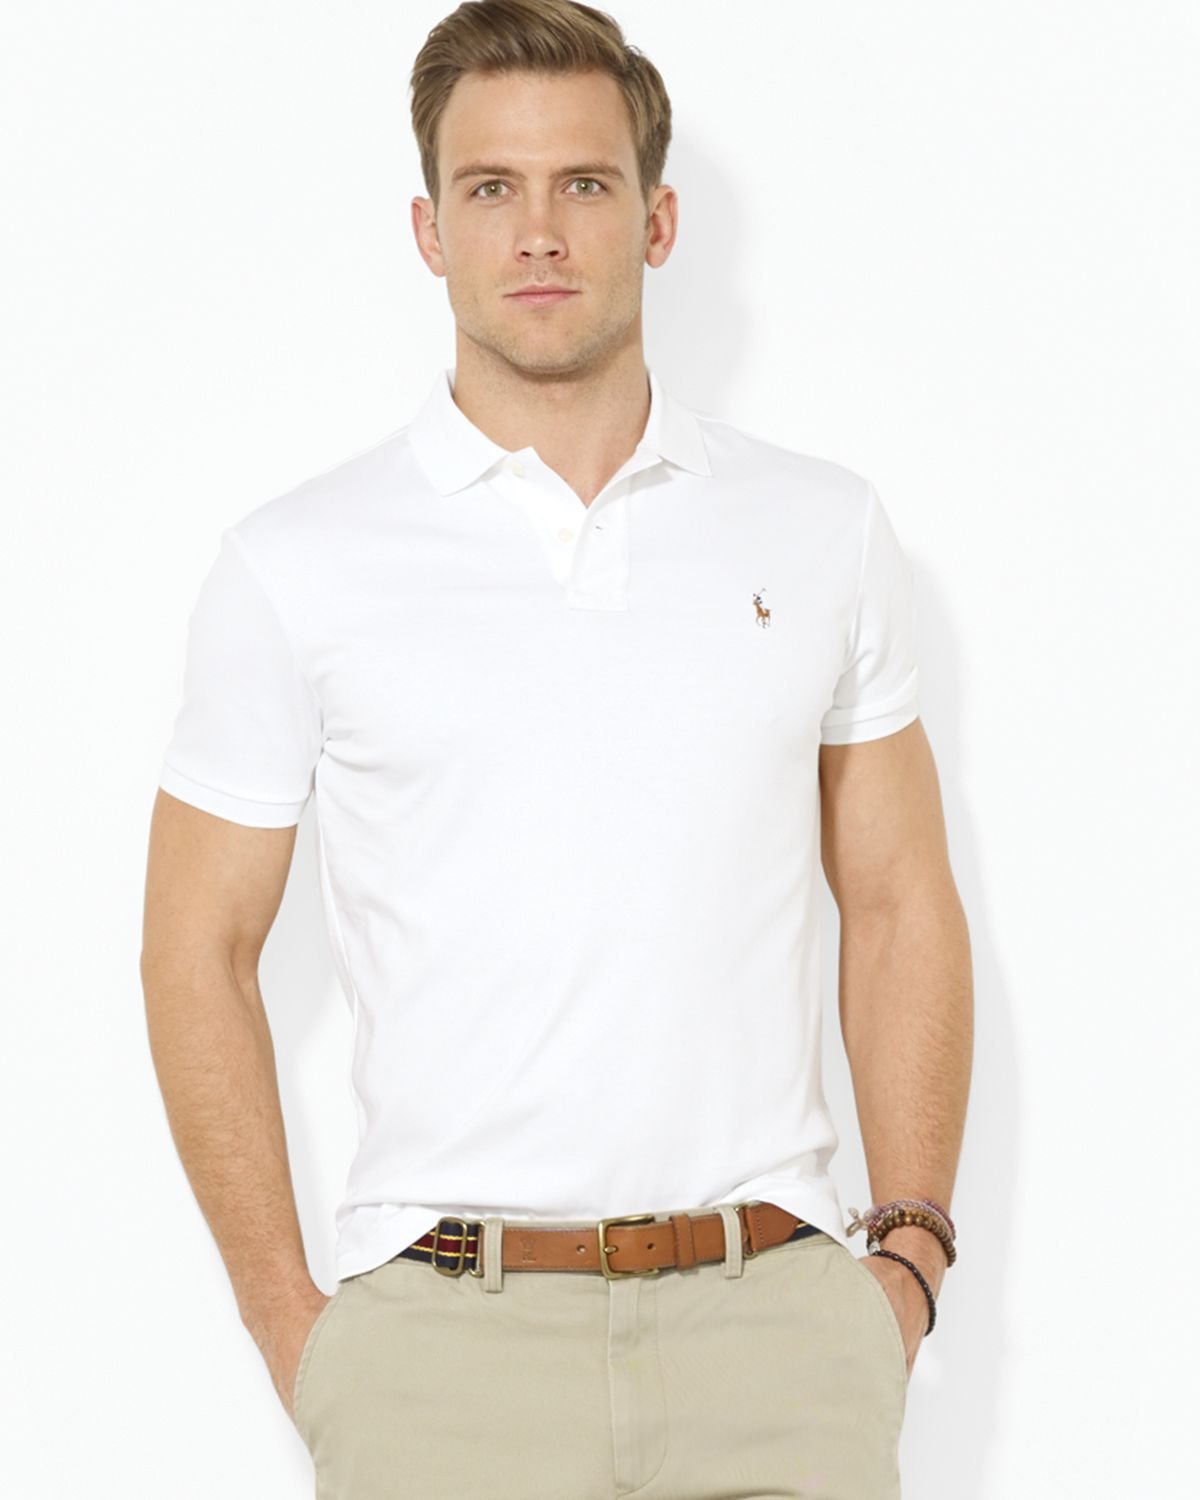 polo shirt white | Polo shirt outfits, Polo shirt outfit men, Custom